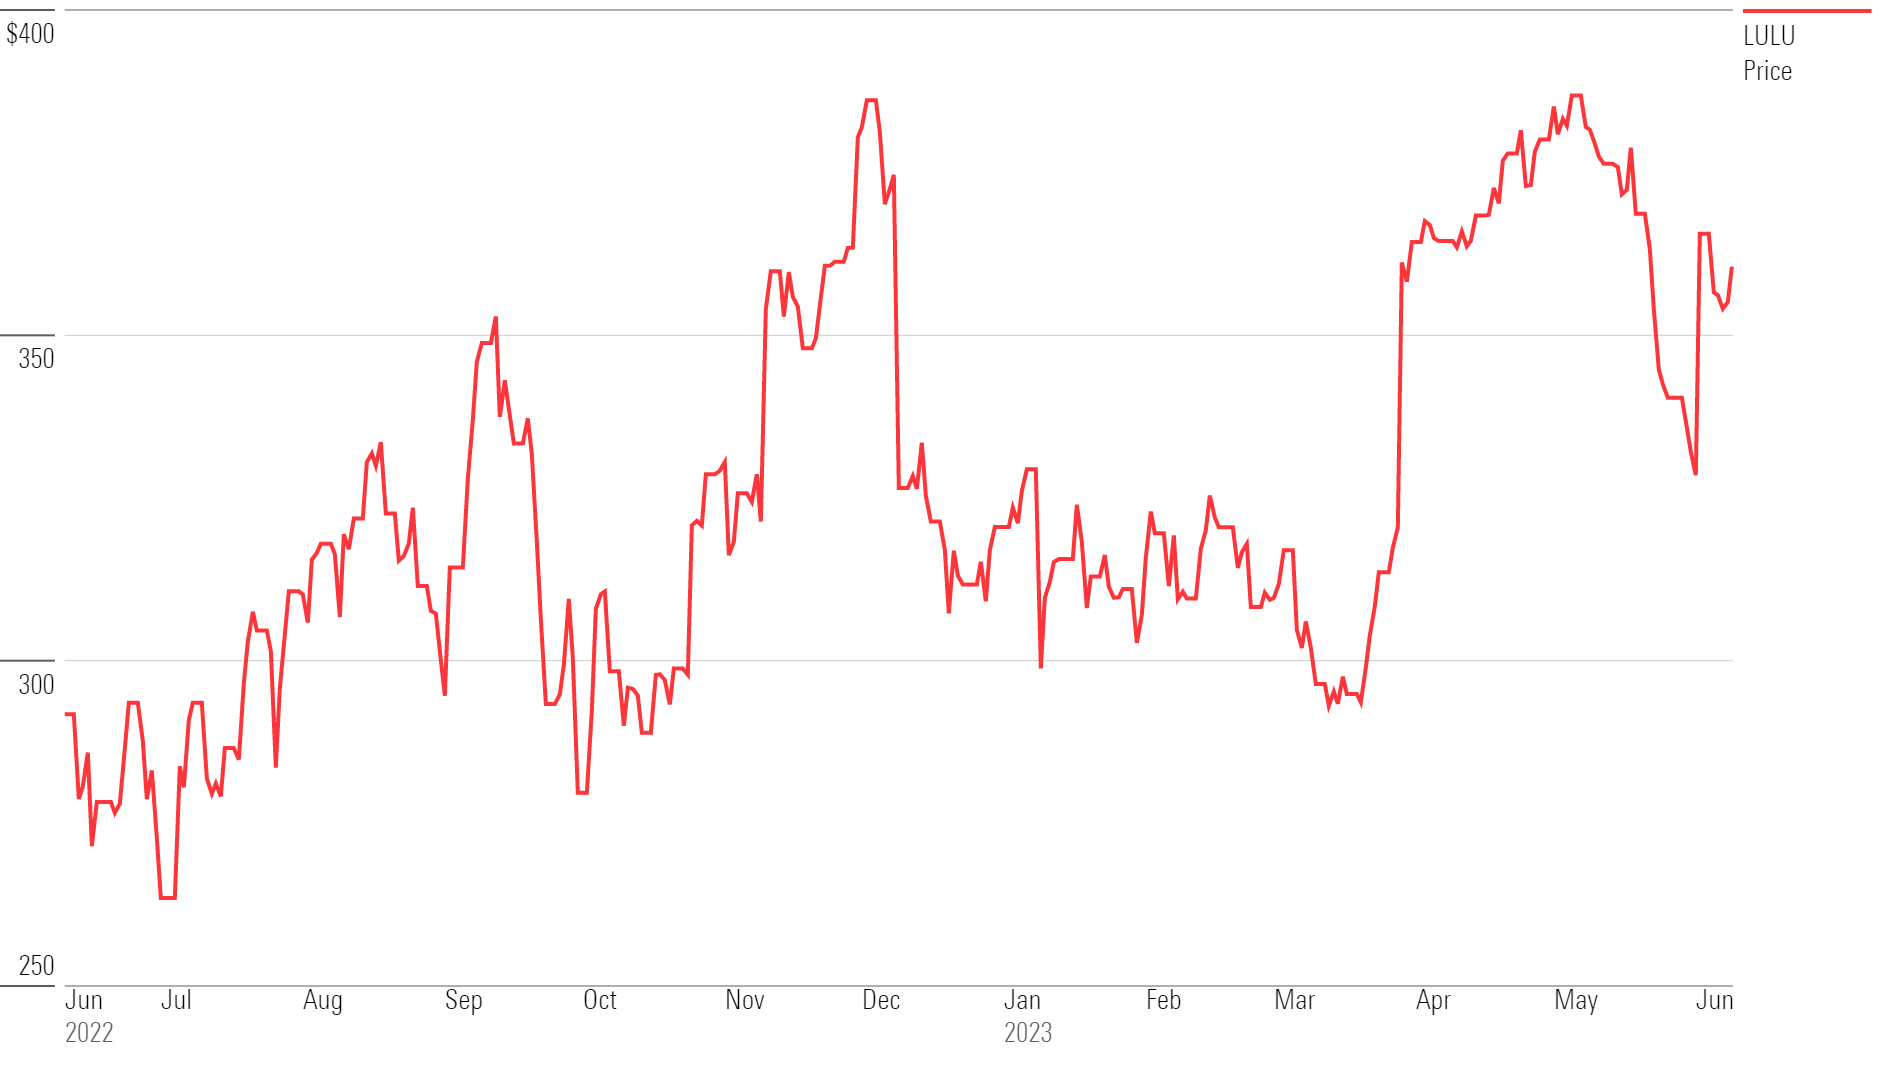 lululemon stock price over the last year